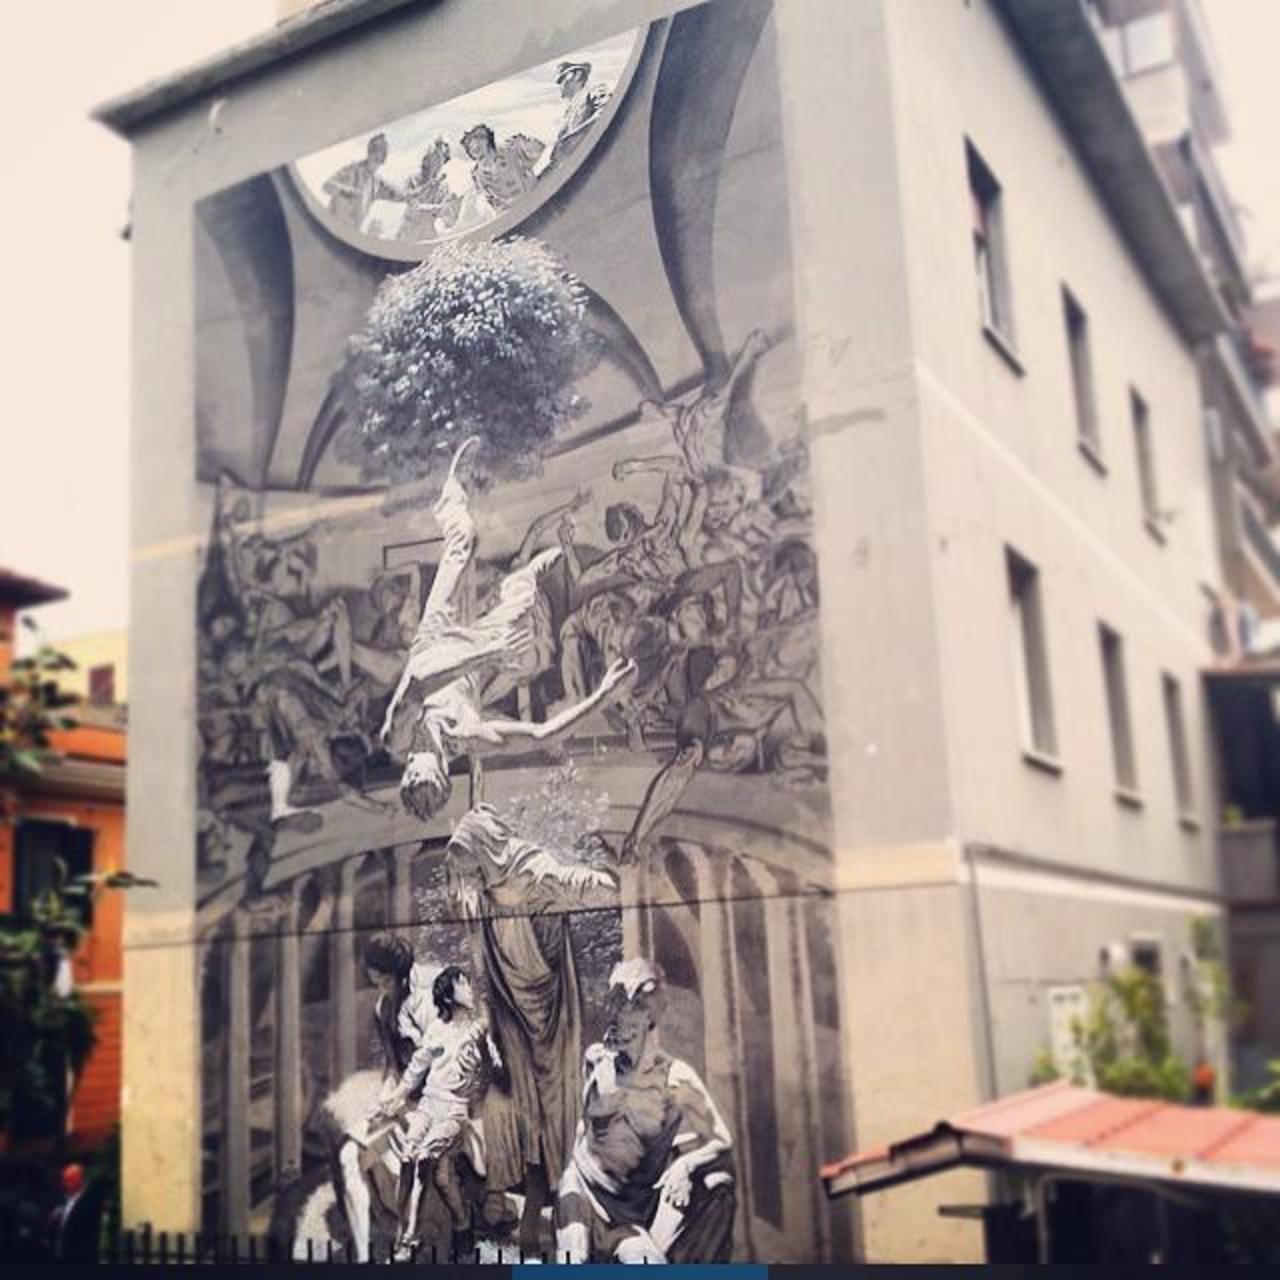 RT @StArtEverywhere: Street art in Roma,Italy
Artist: Nicola Verlato #streetart #graffiti #streetartrome #artderue #arteurbano PIC:@davX… http://t.co/gpzMAivWgg